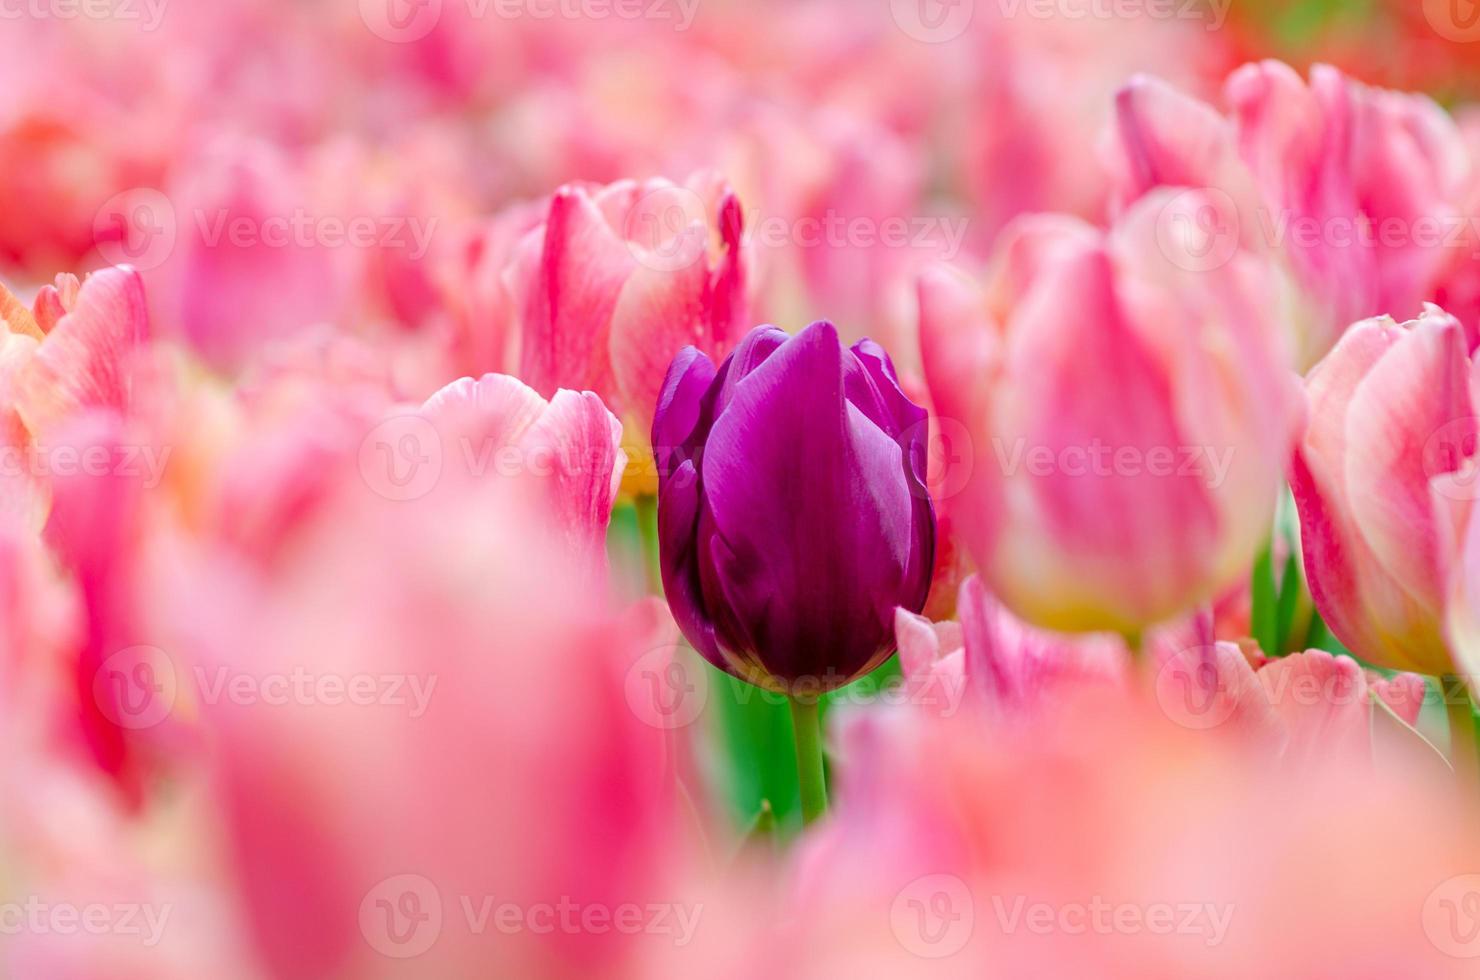 paarse tulpenvelden midden tussen roze tulpen staan dicht in bloei foto